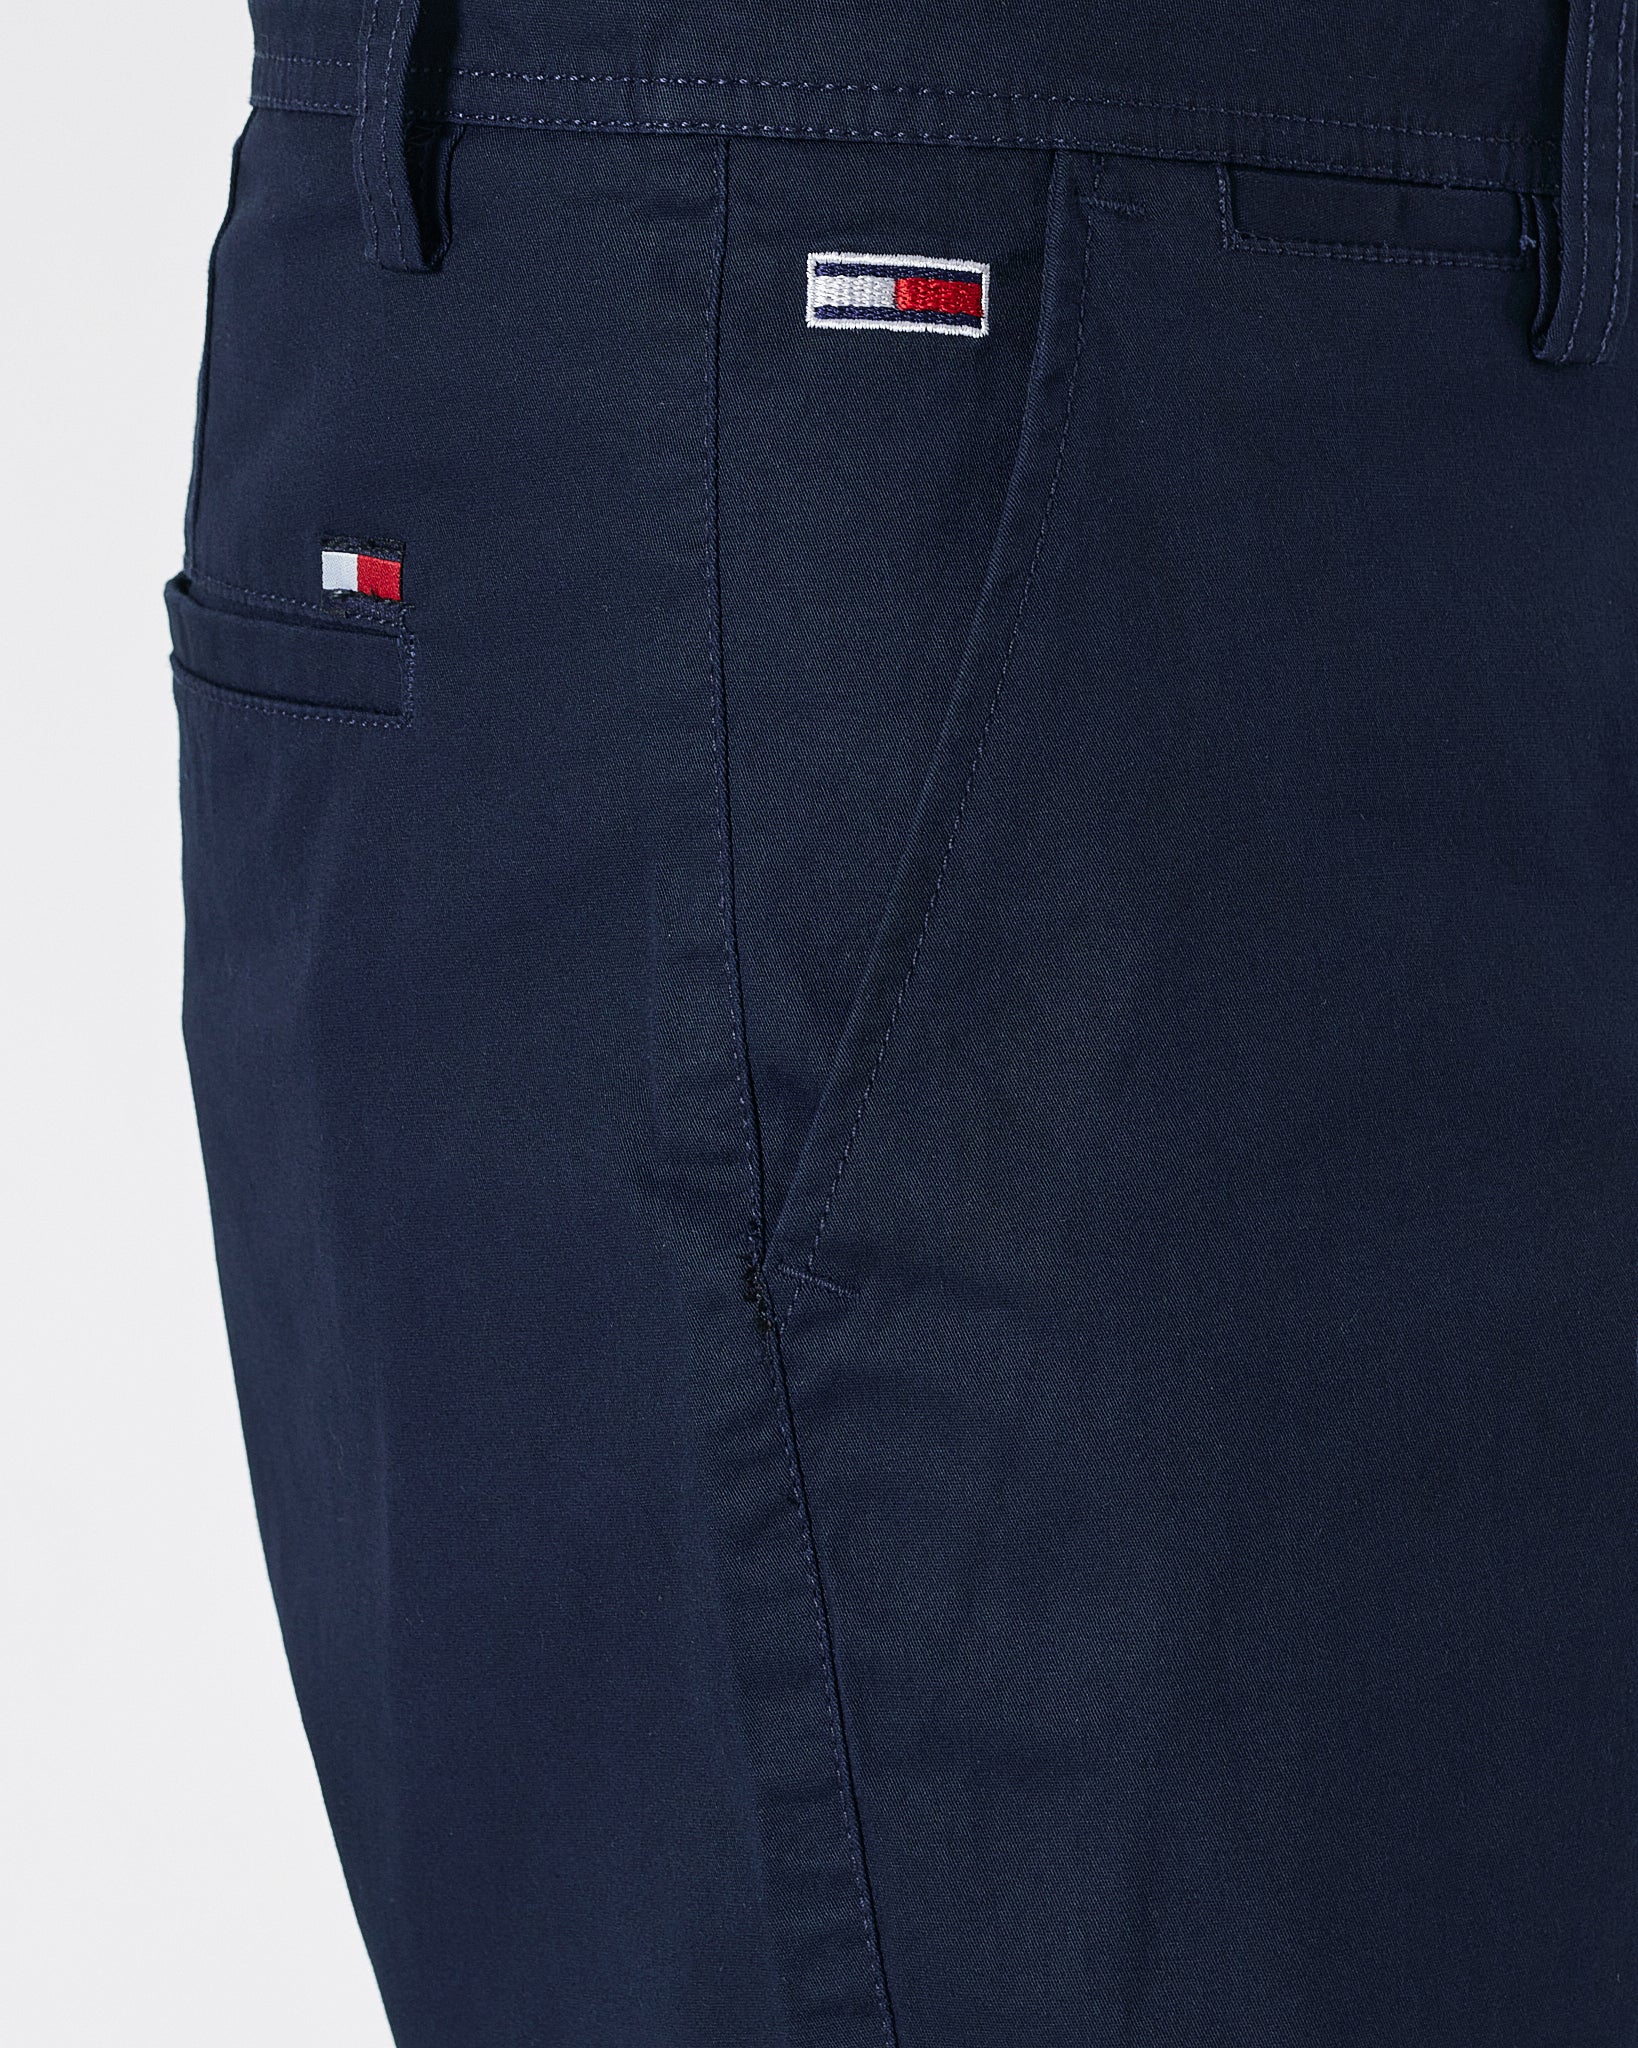 RL Khaki Men Blue Short Pants 16.90